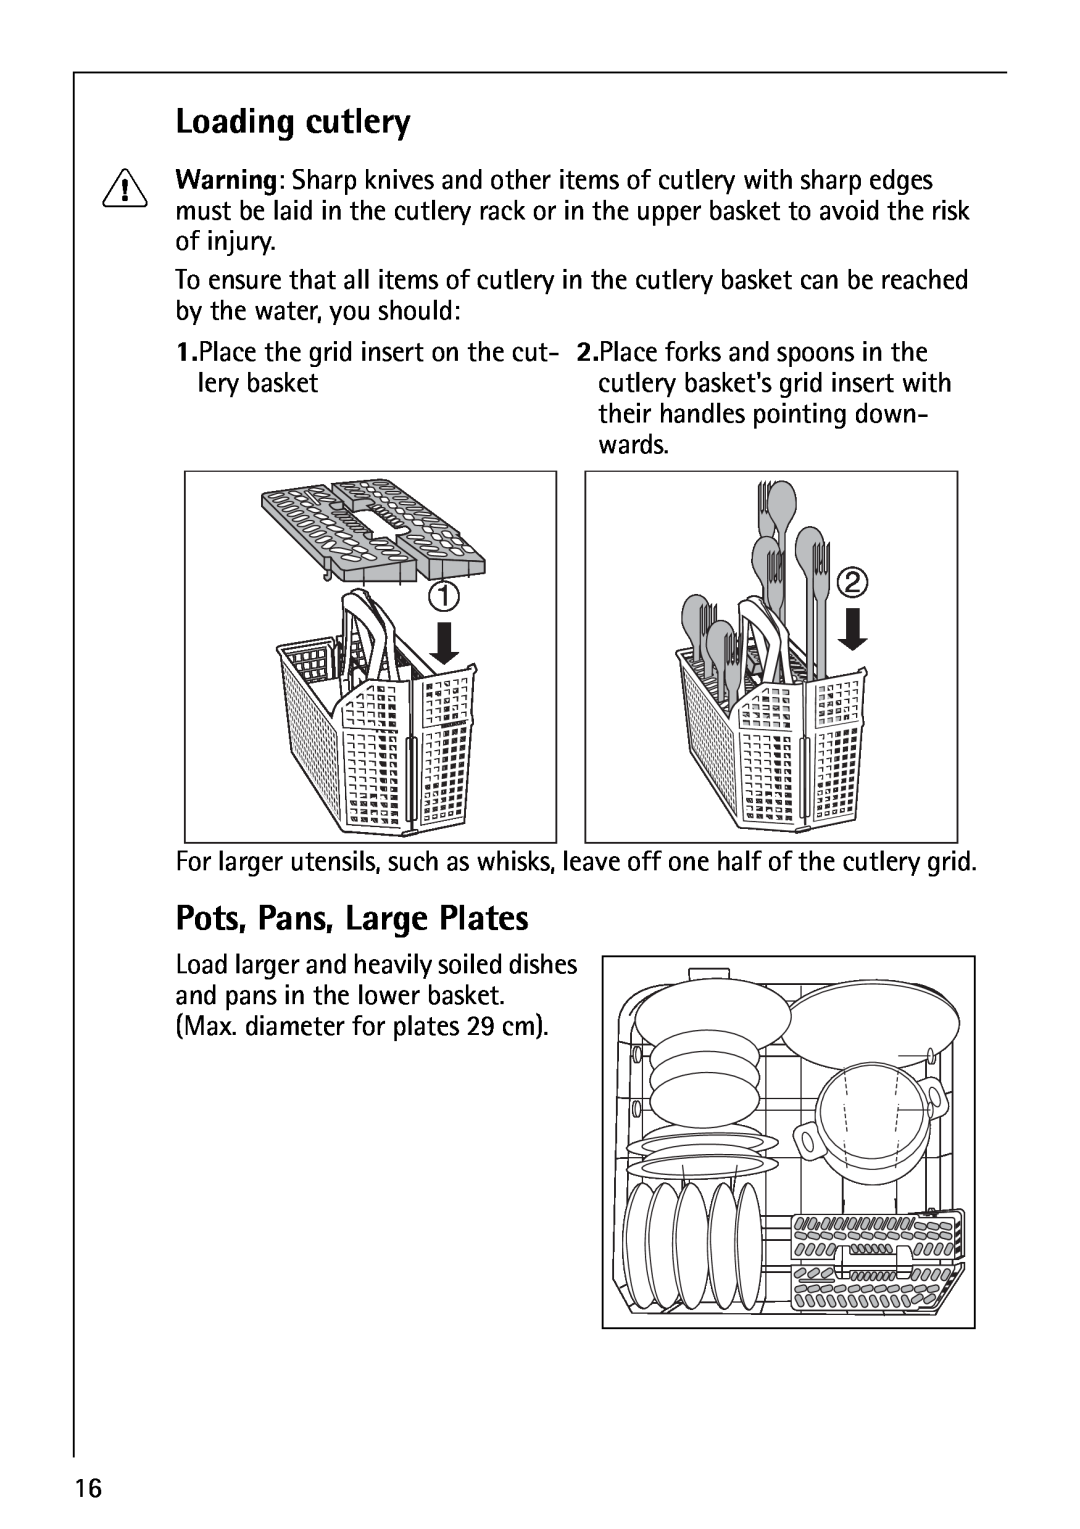 AEG 44080 I manual Loading cutlery, Pots, Pans, Large Plates 